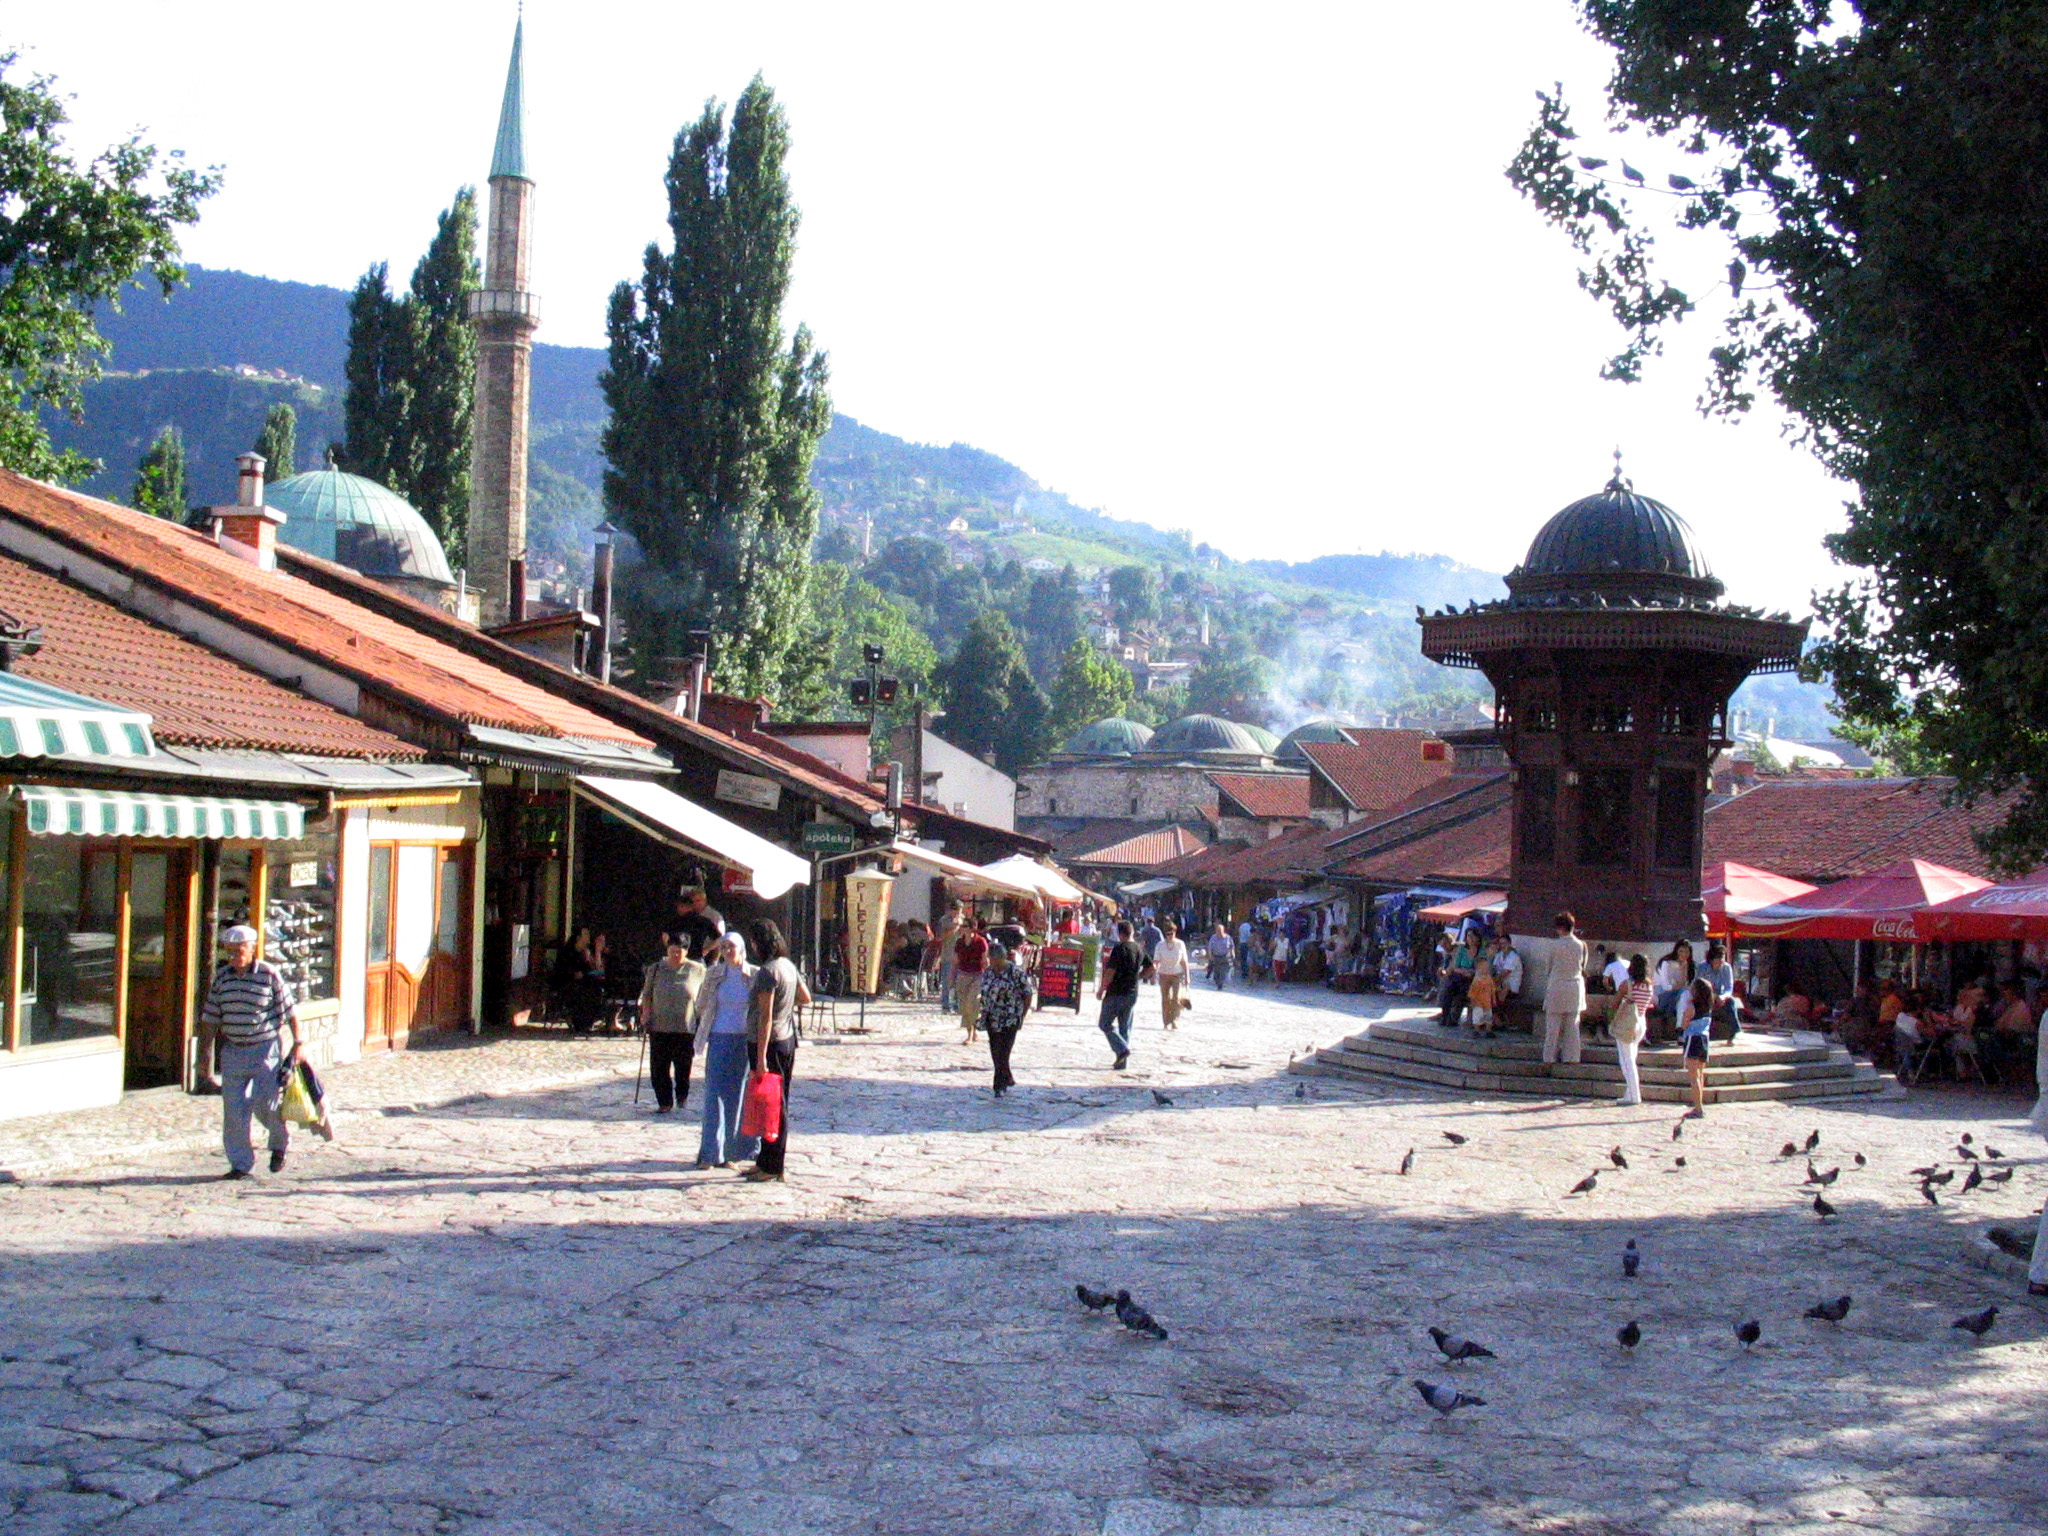 Filming locations in Bosnia - Sarajevo